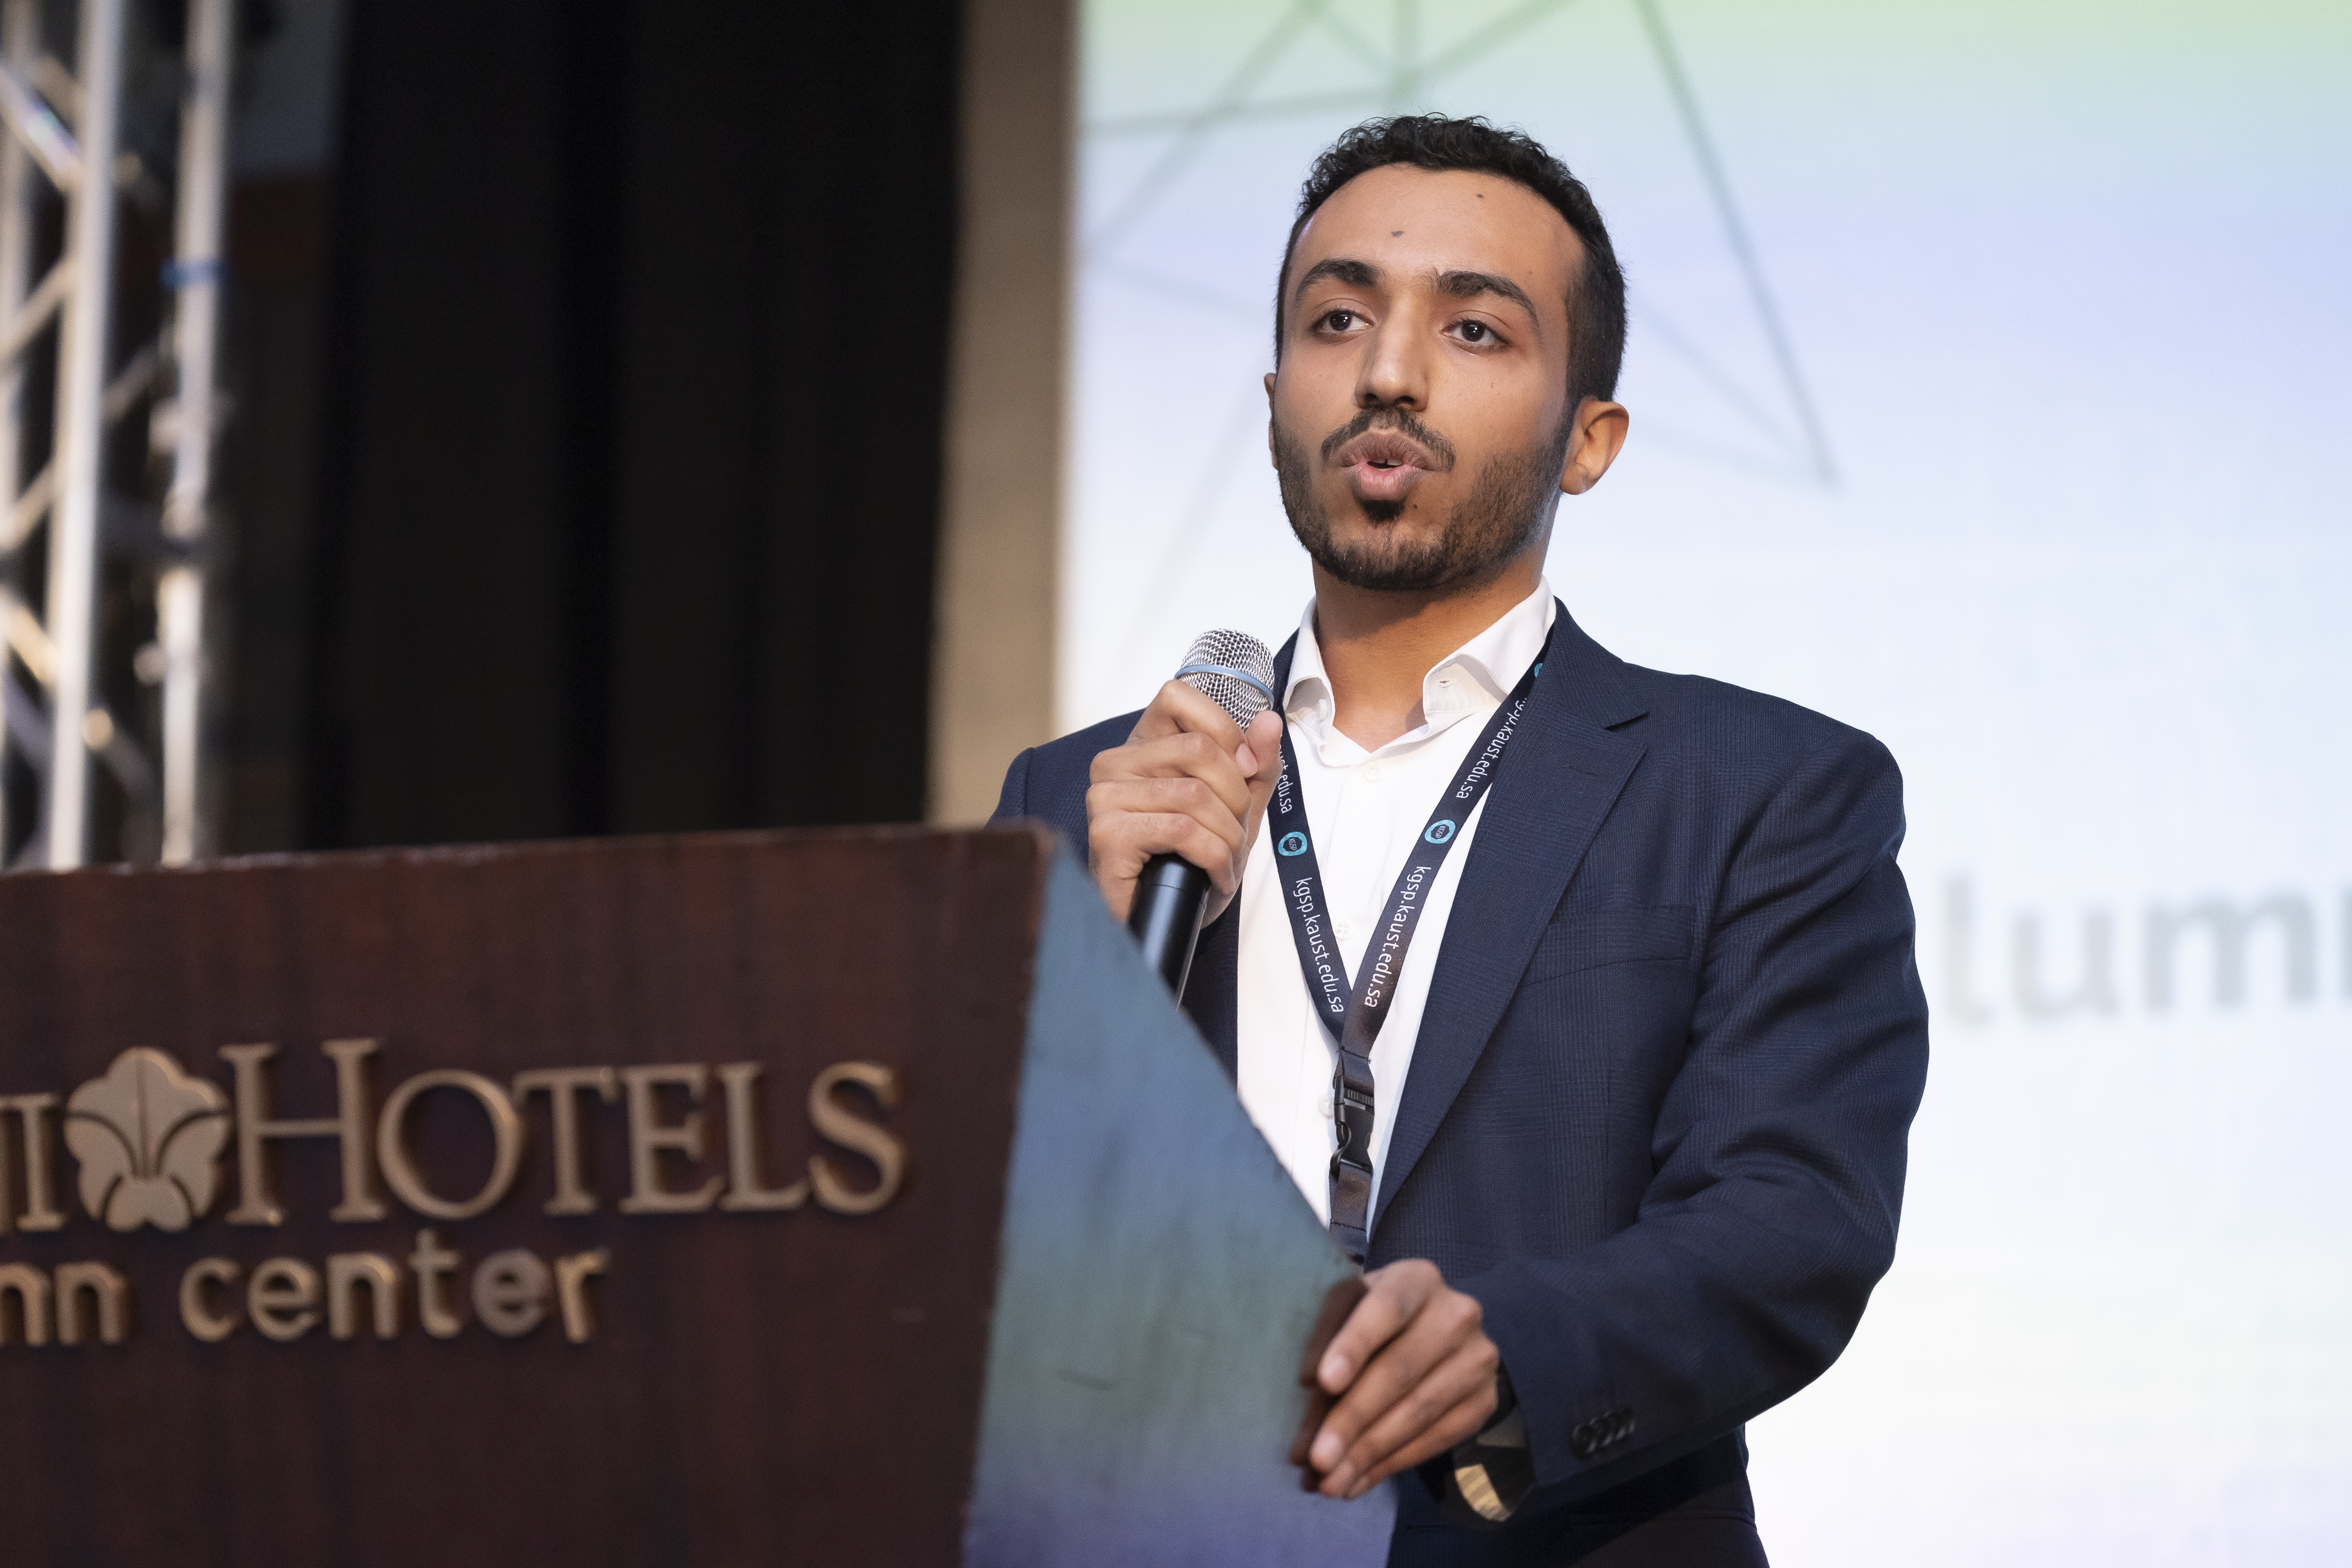 Image 1: KGSP alum Ahmed Albuwaydi speaking at the 2023 Convocation in Atlanta, GA